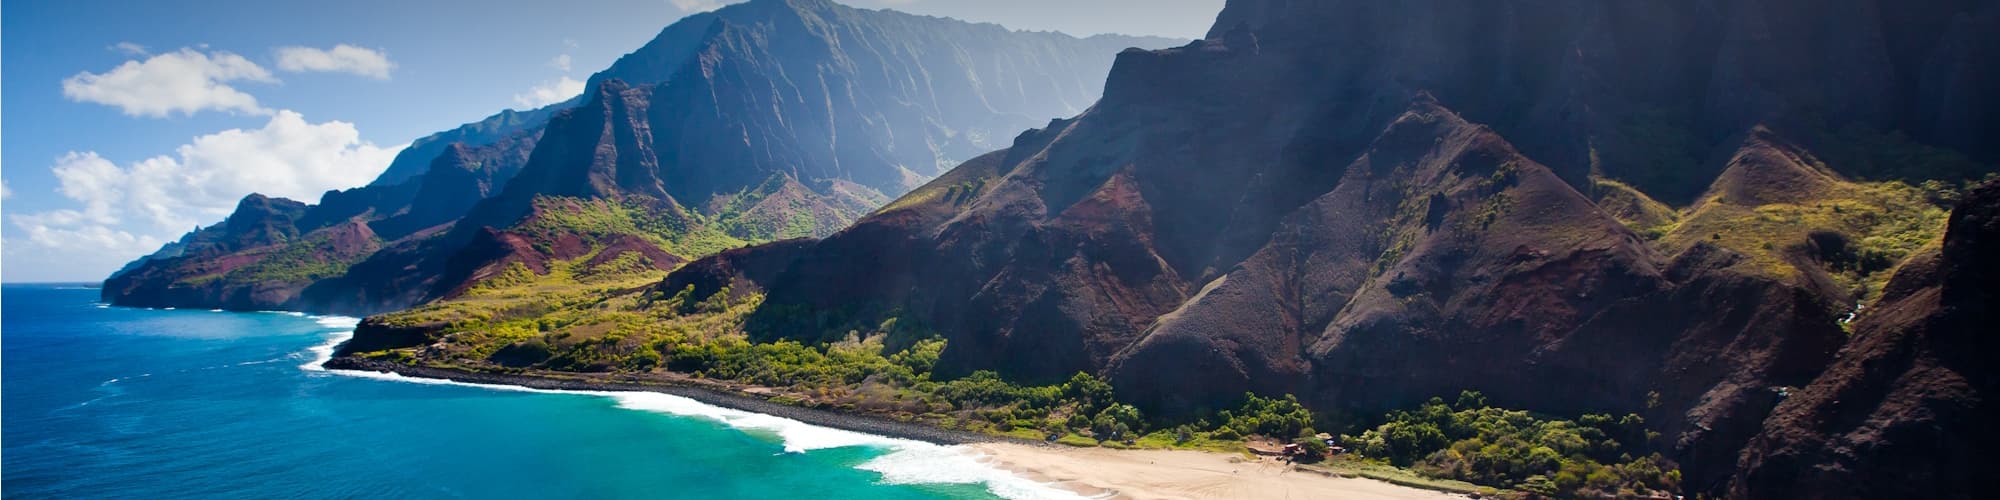 Voyage sur mesure Hawaï © Hawaii Tourism Authority/Tor Johnson